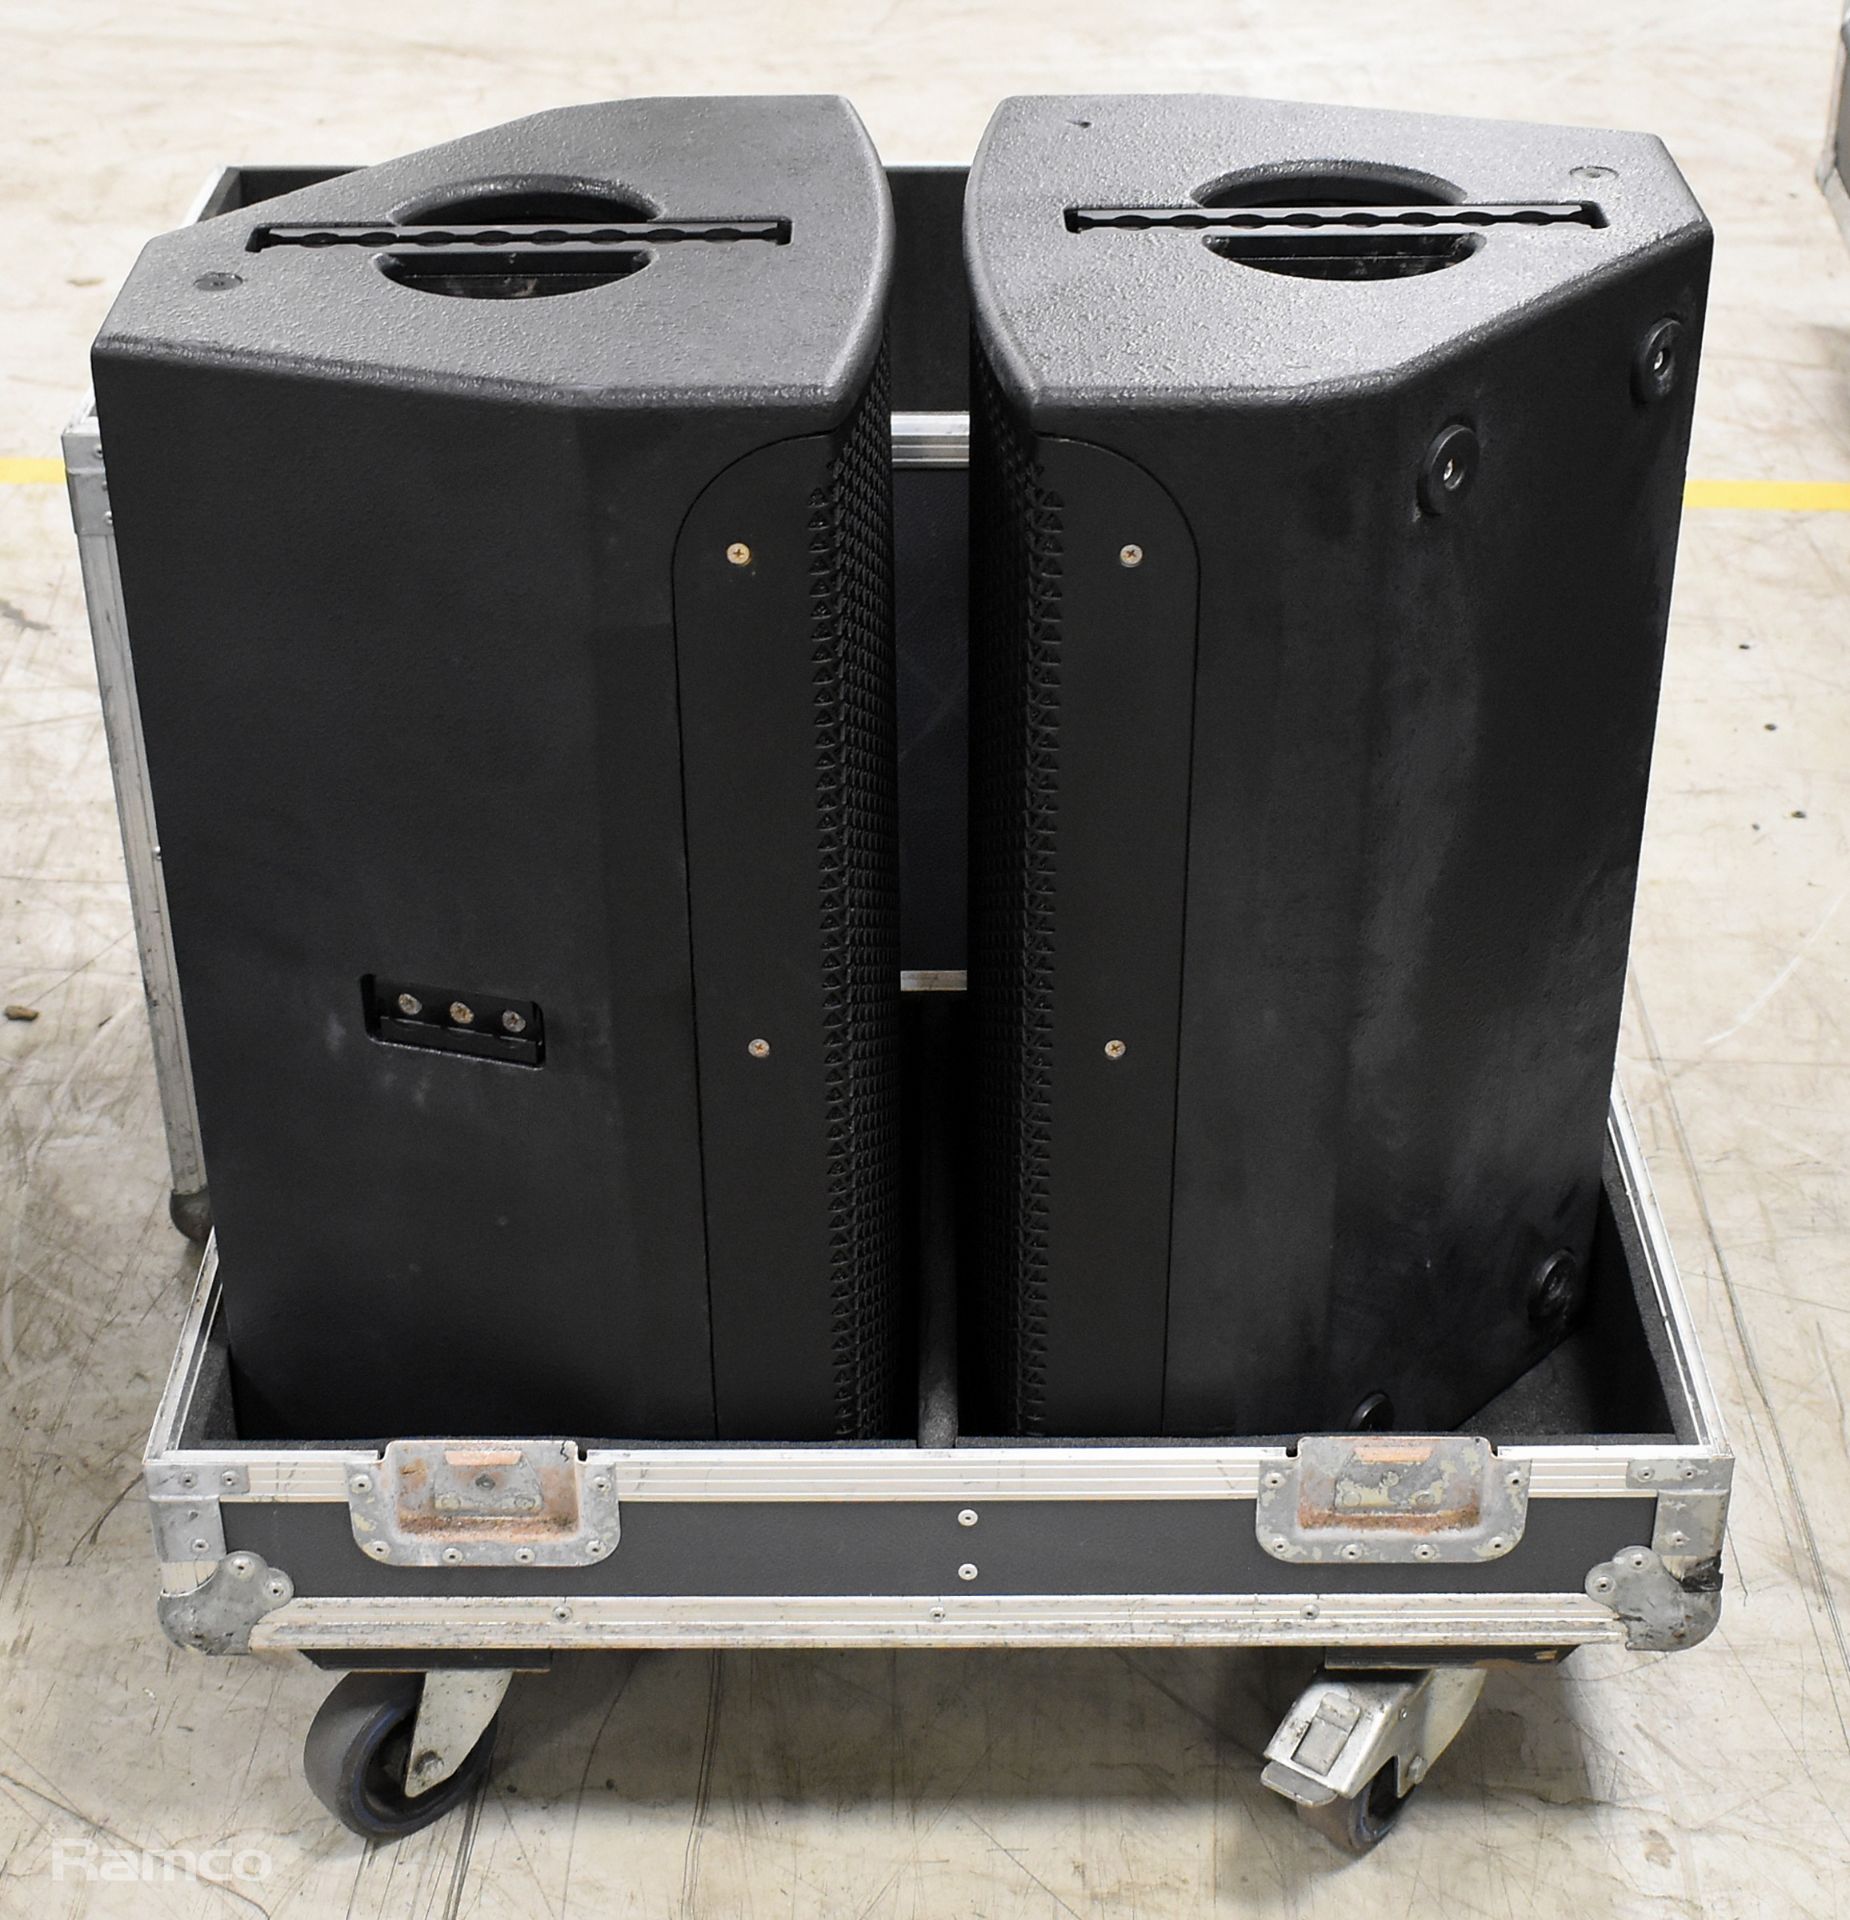 2x HK Contour Series CT 112 speakers in flight case - FOH & monitor speakers - Image 11 of 13